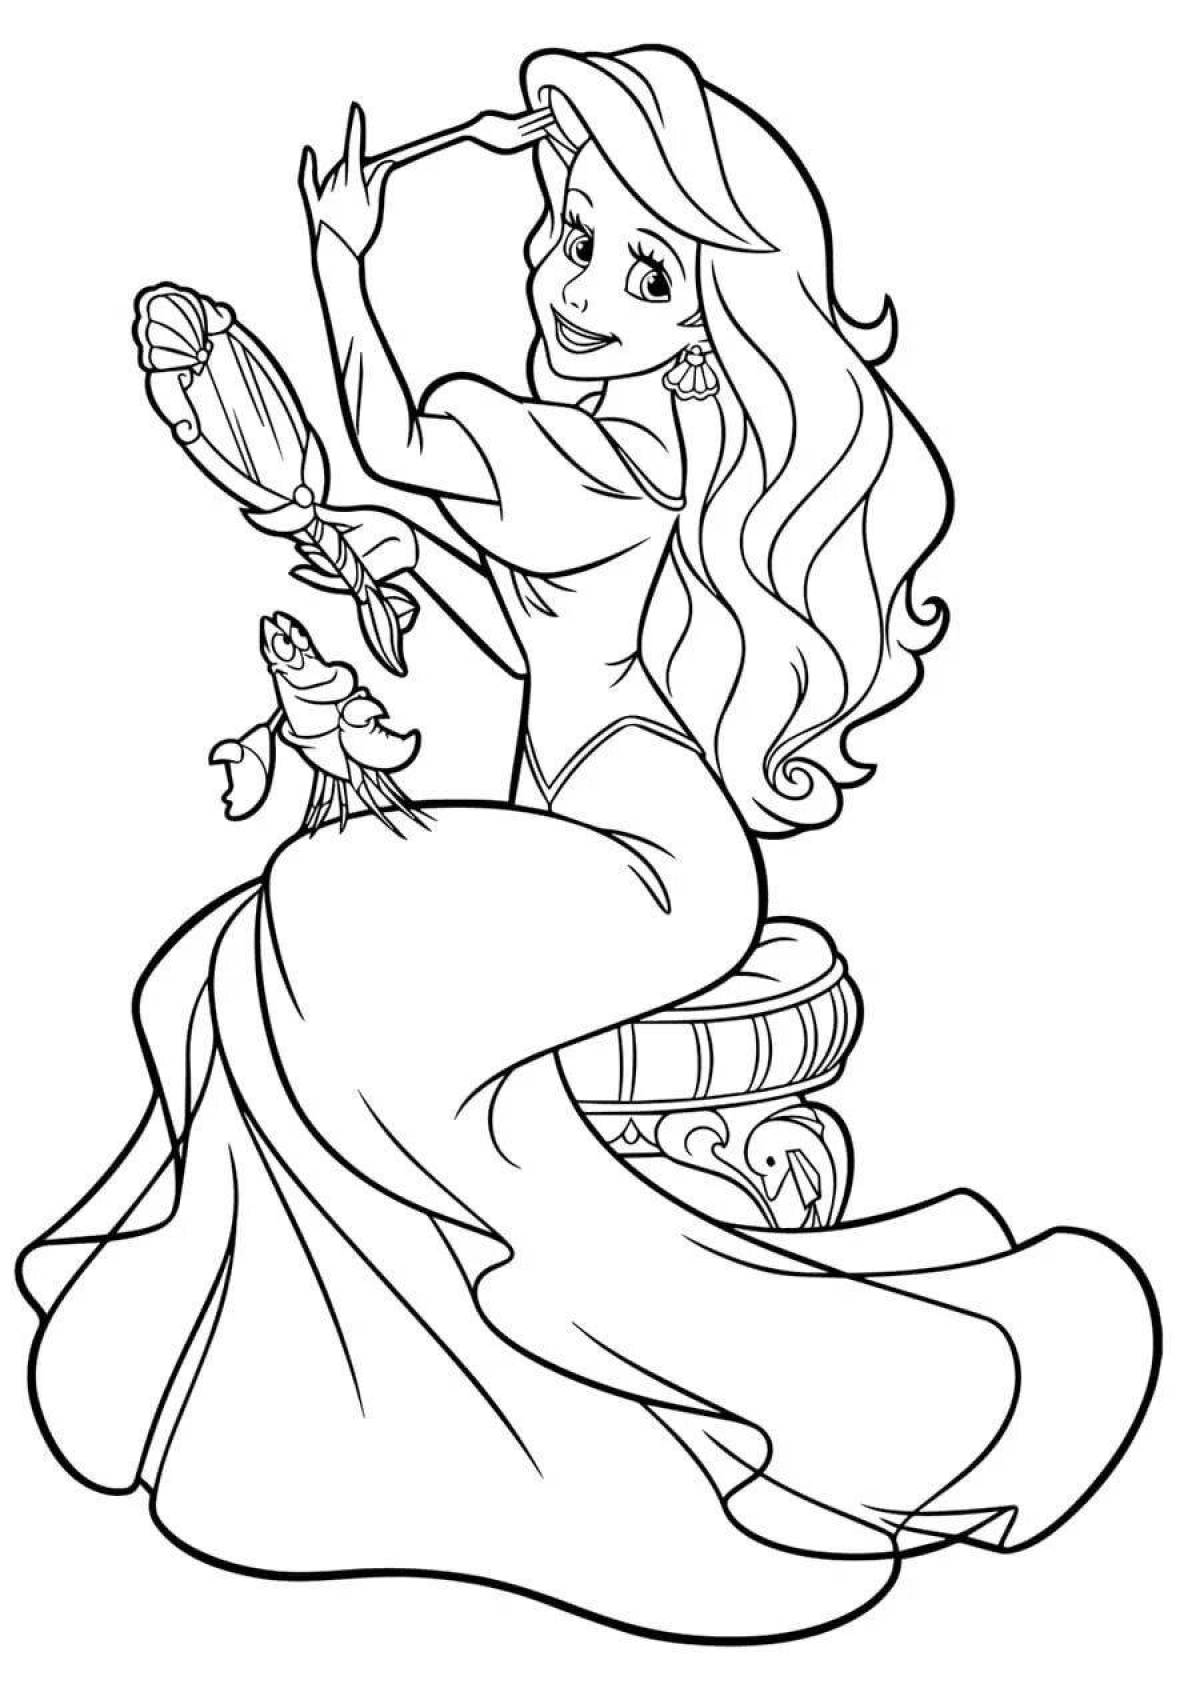 Princess ariel's adorable coloring mermaid